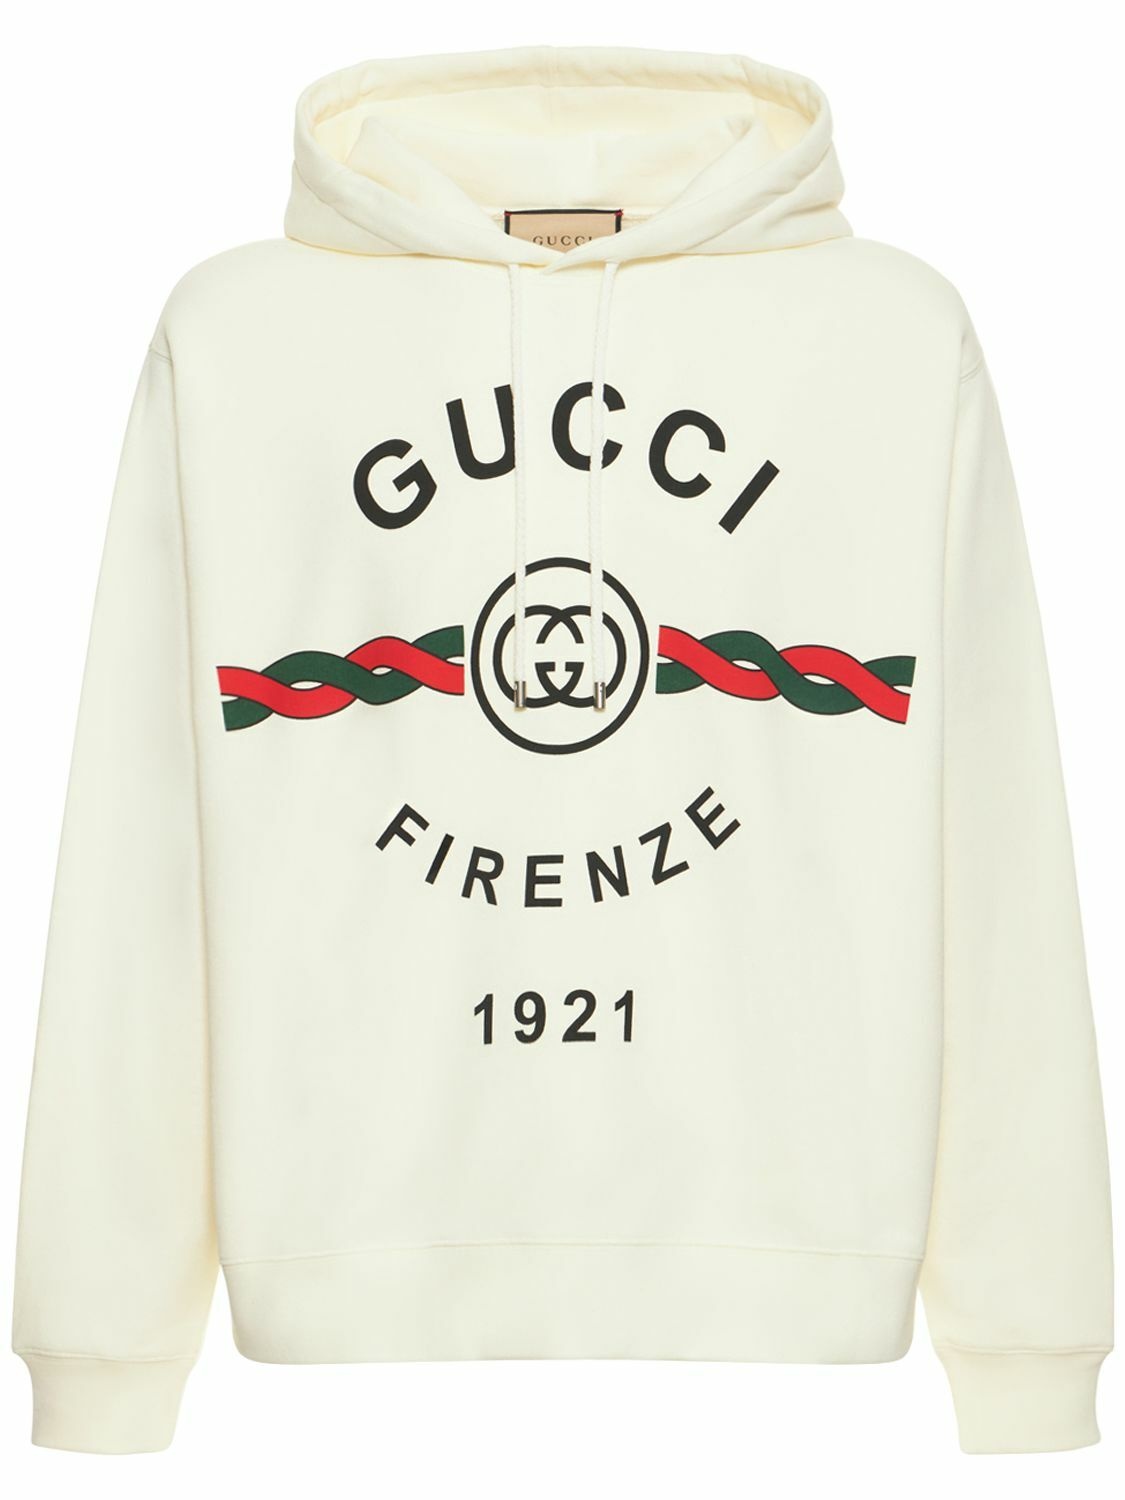 Photo: GUCCI - Gucci Firenze 1921 Cotton Hoodie